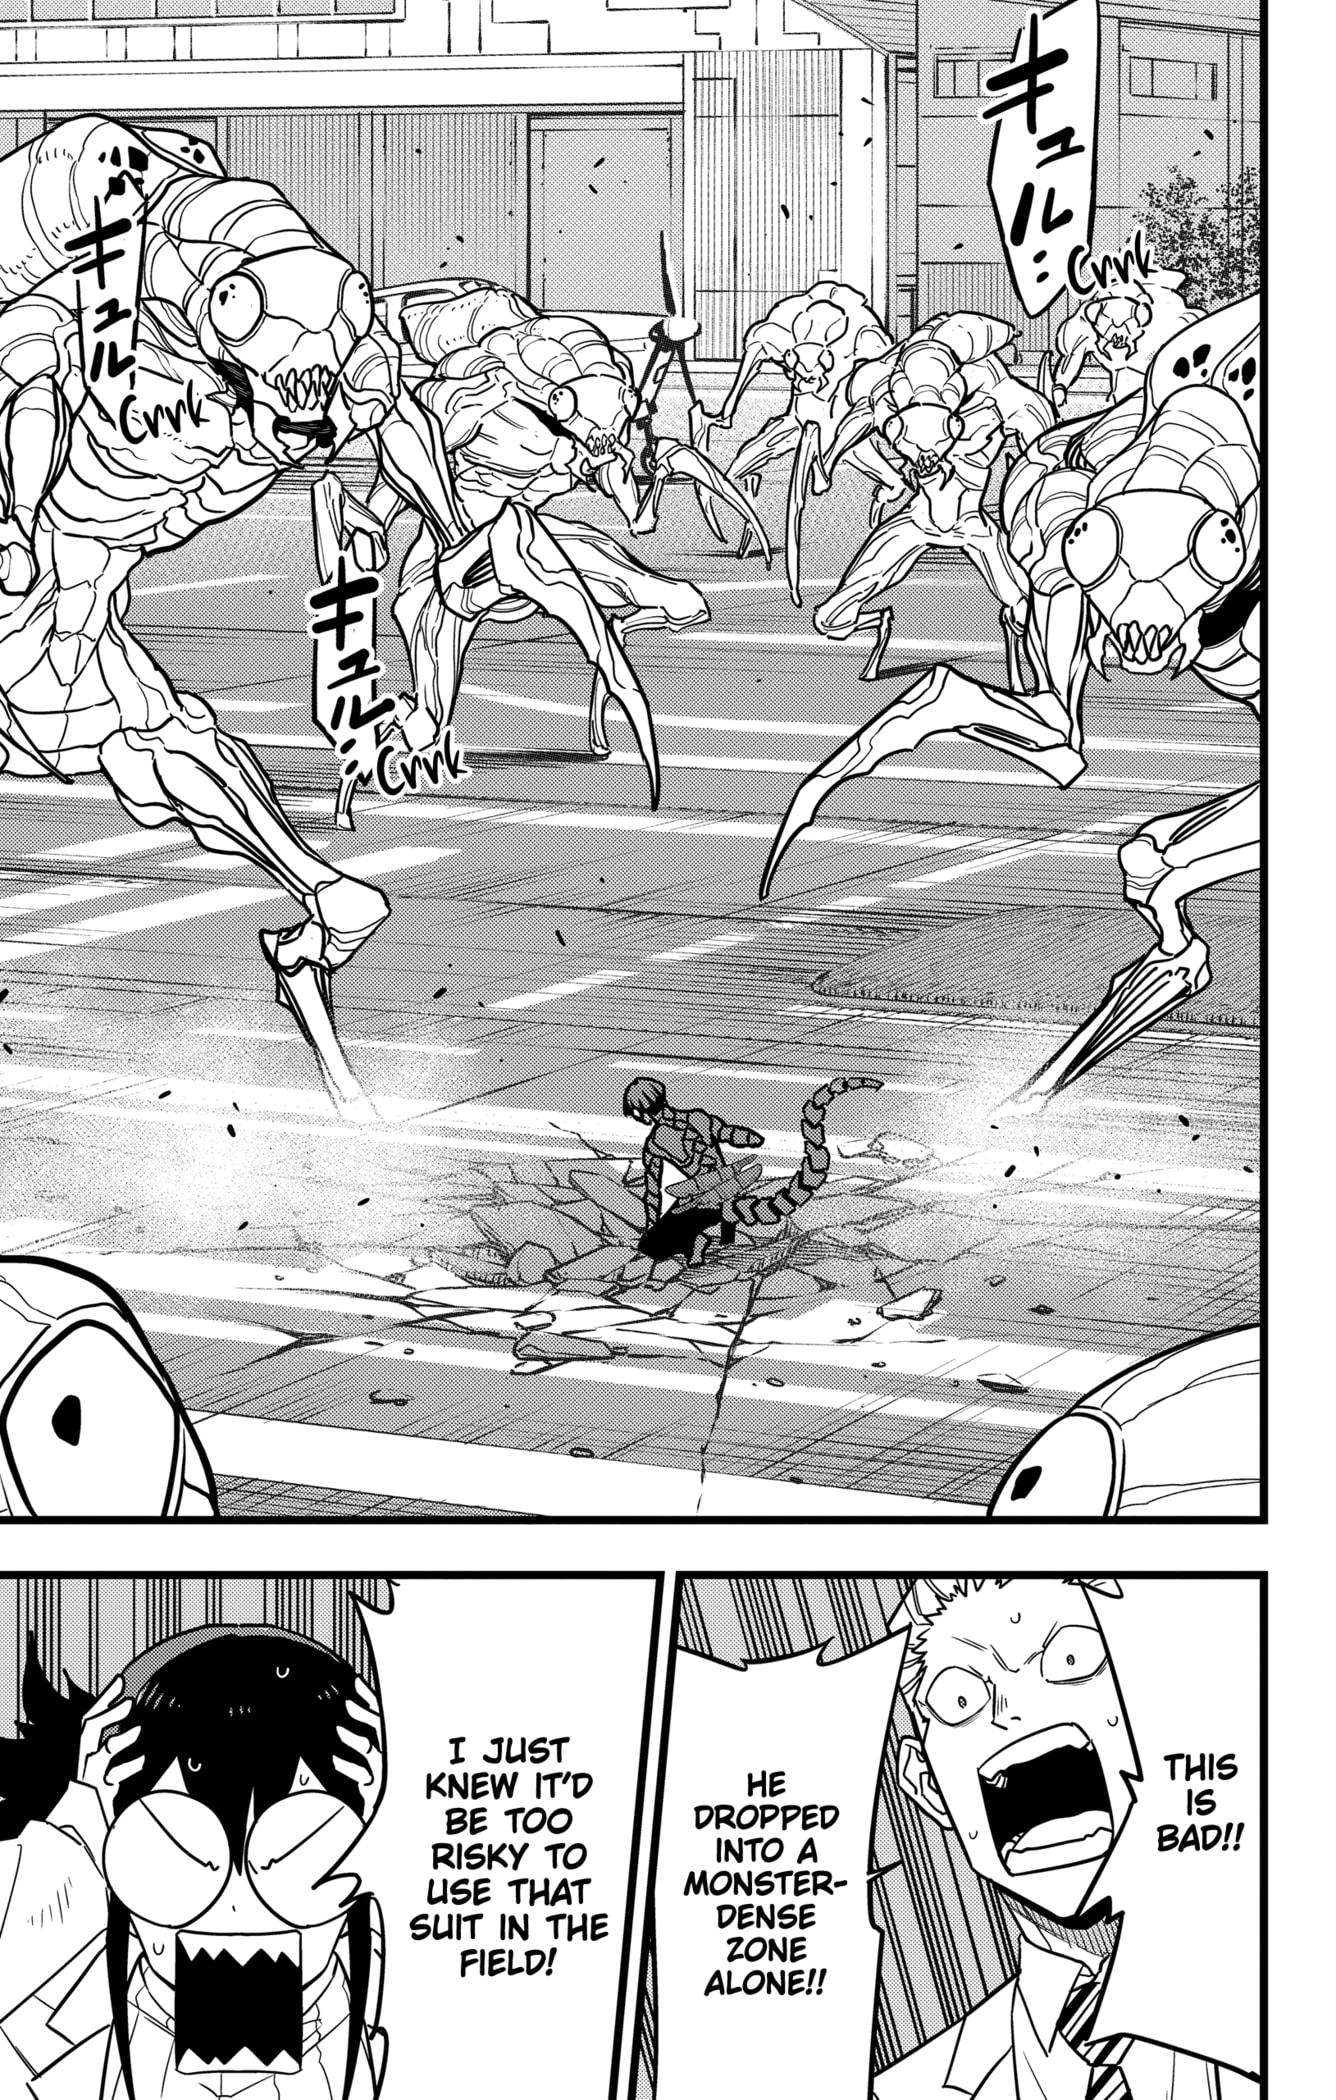 Kaiju No. 8 Chapter 73 page 11 - Mangakakalot